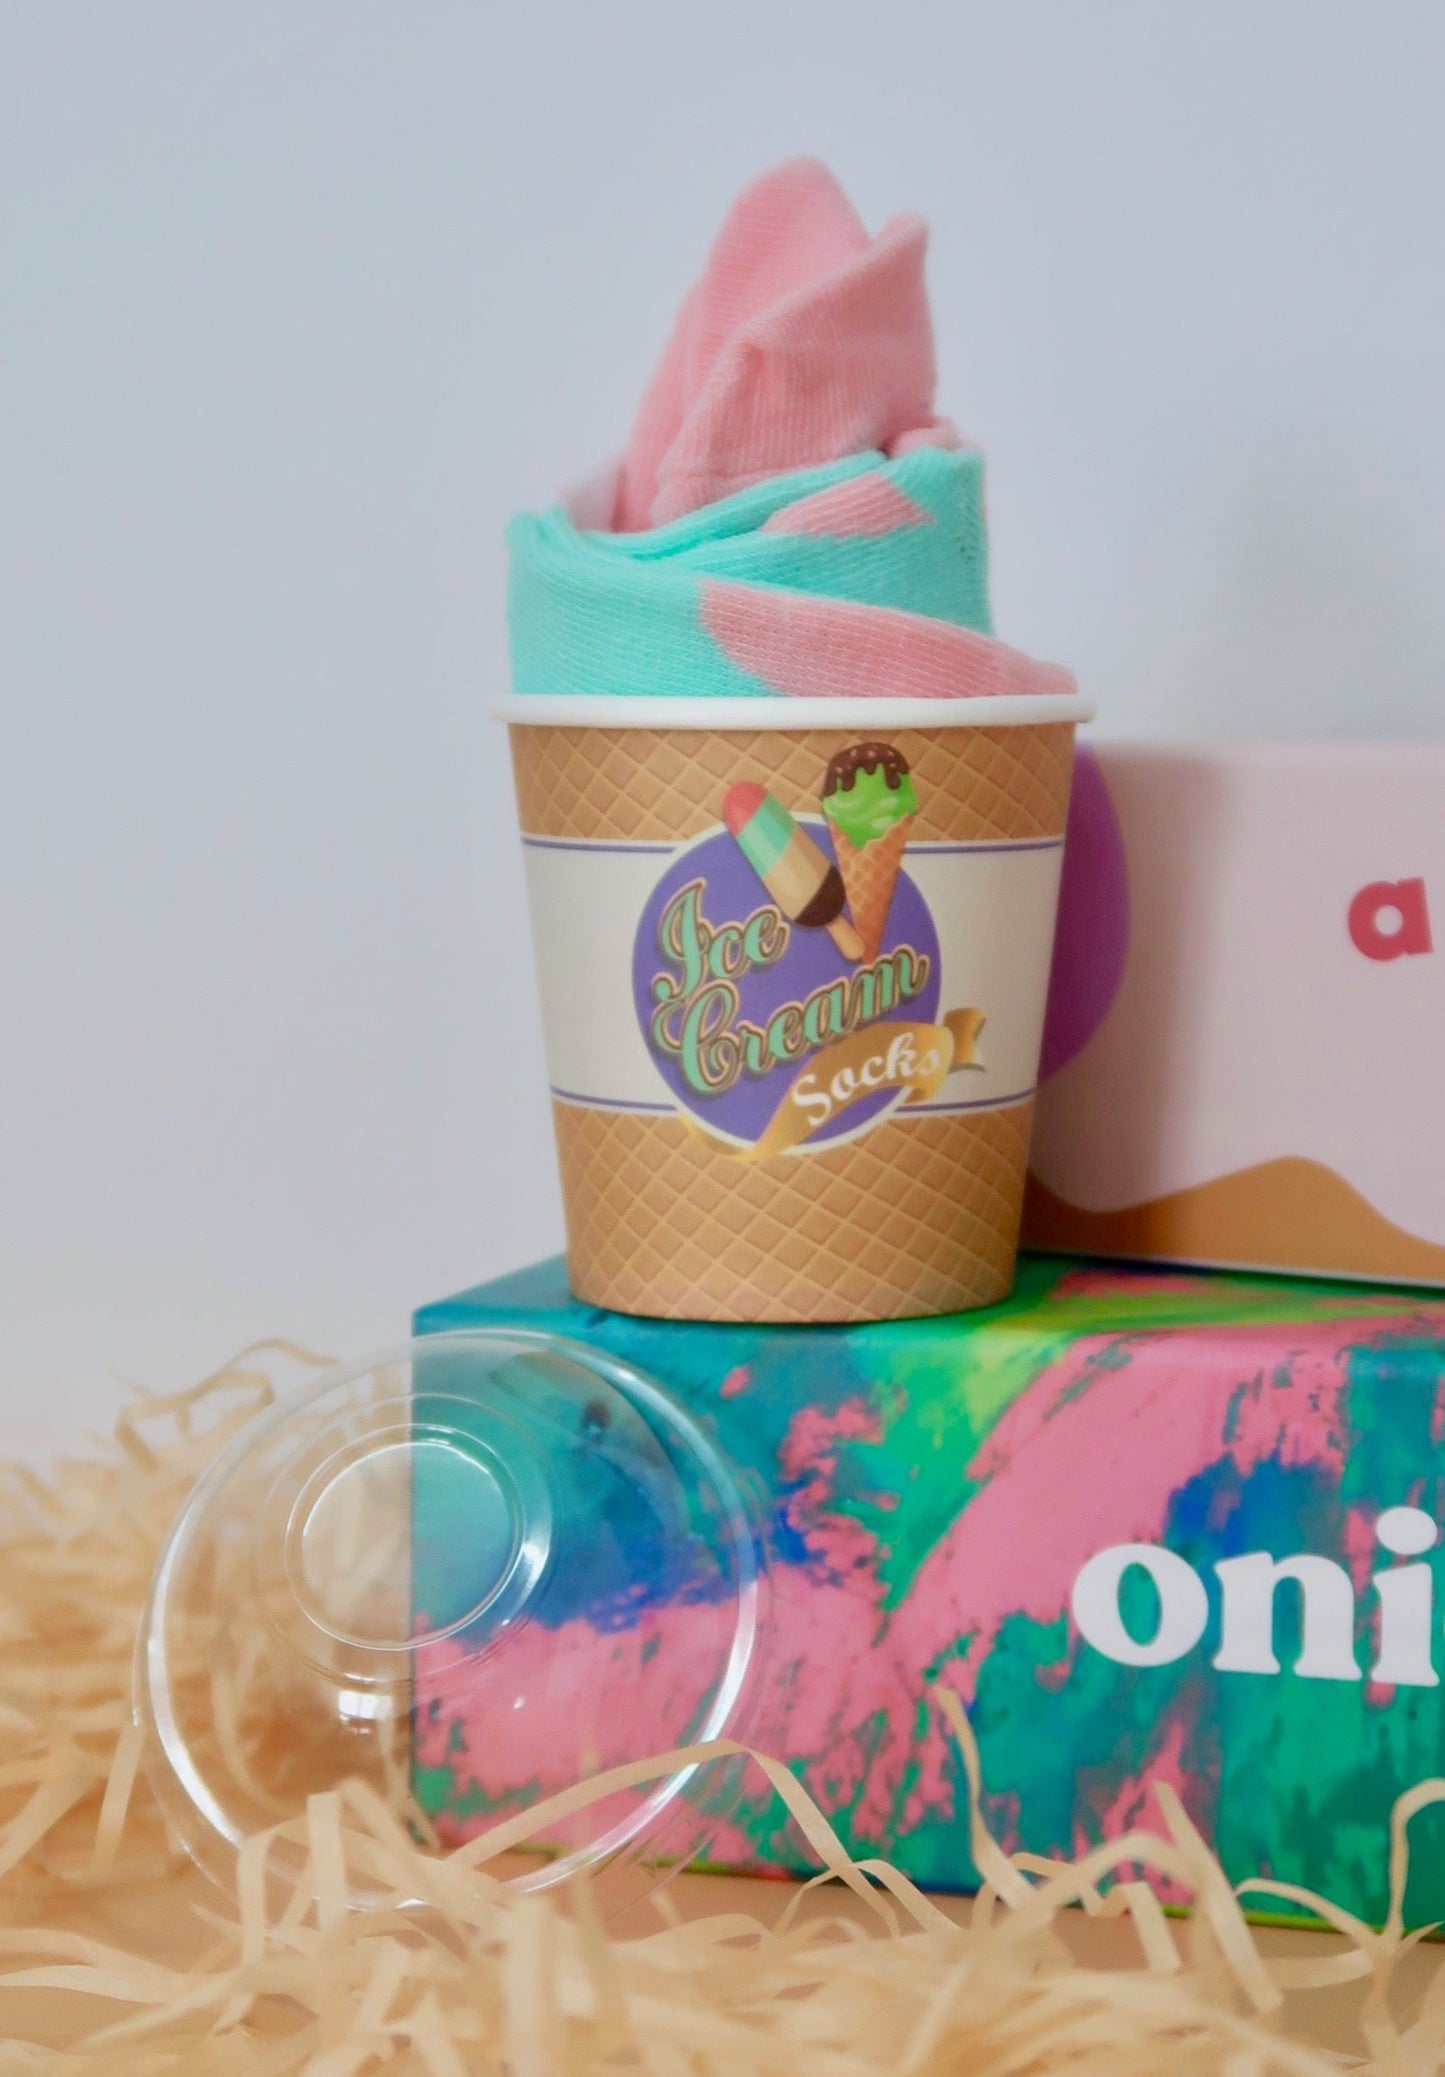 Ice Cream Cup Socks (4 Colors)